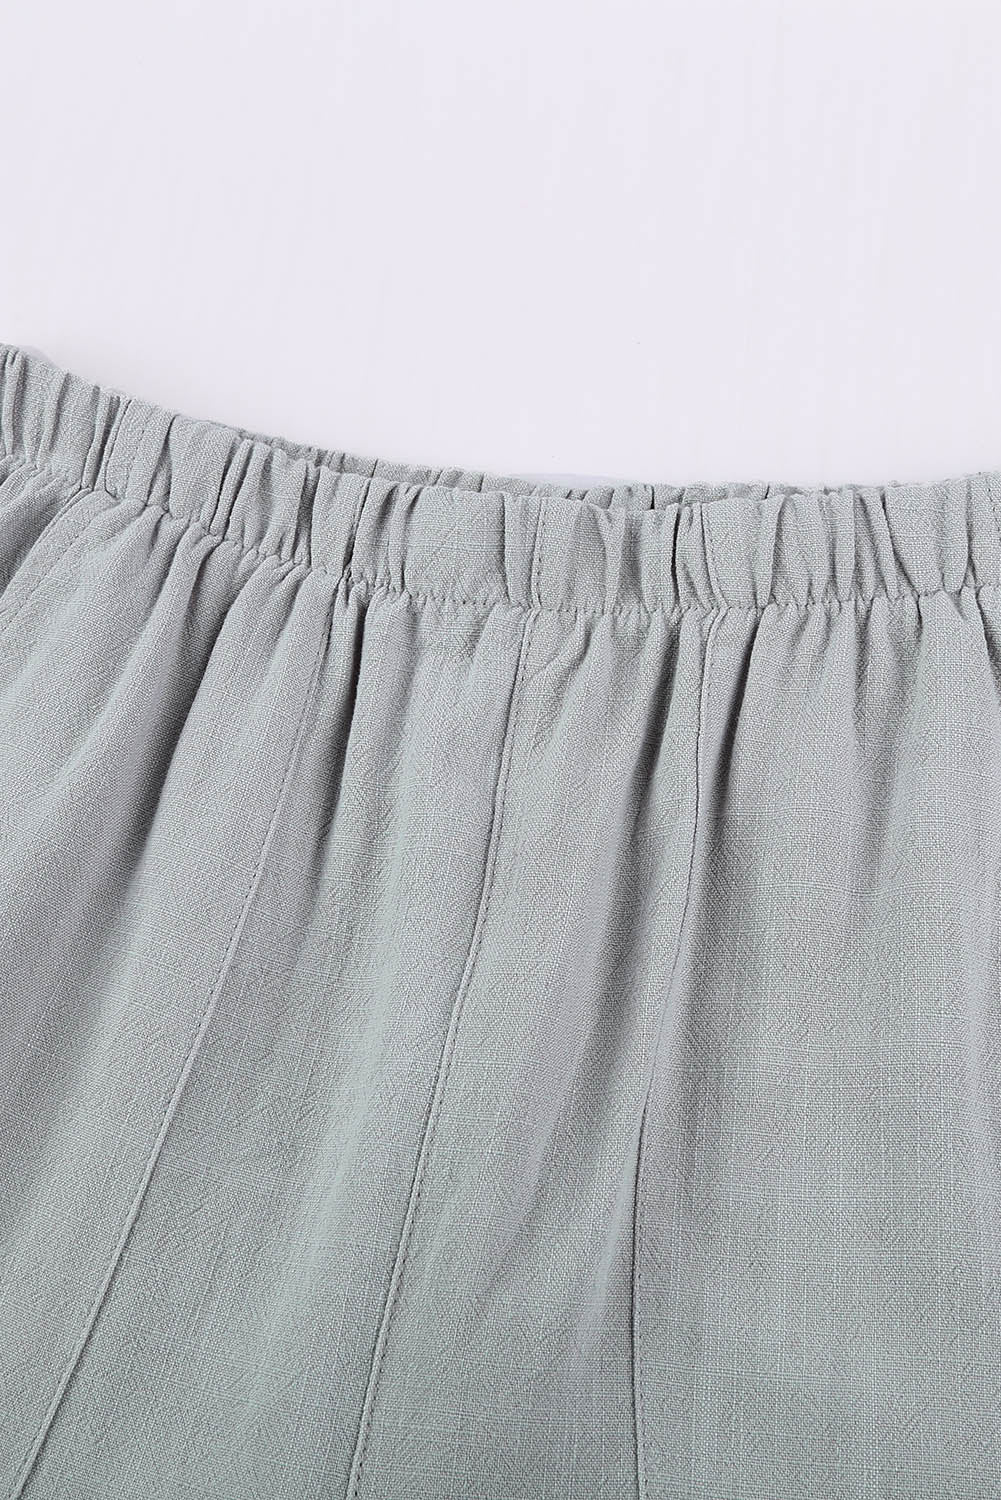 Khaki Casual Pocketed Ruffle High Waist Shorts